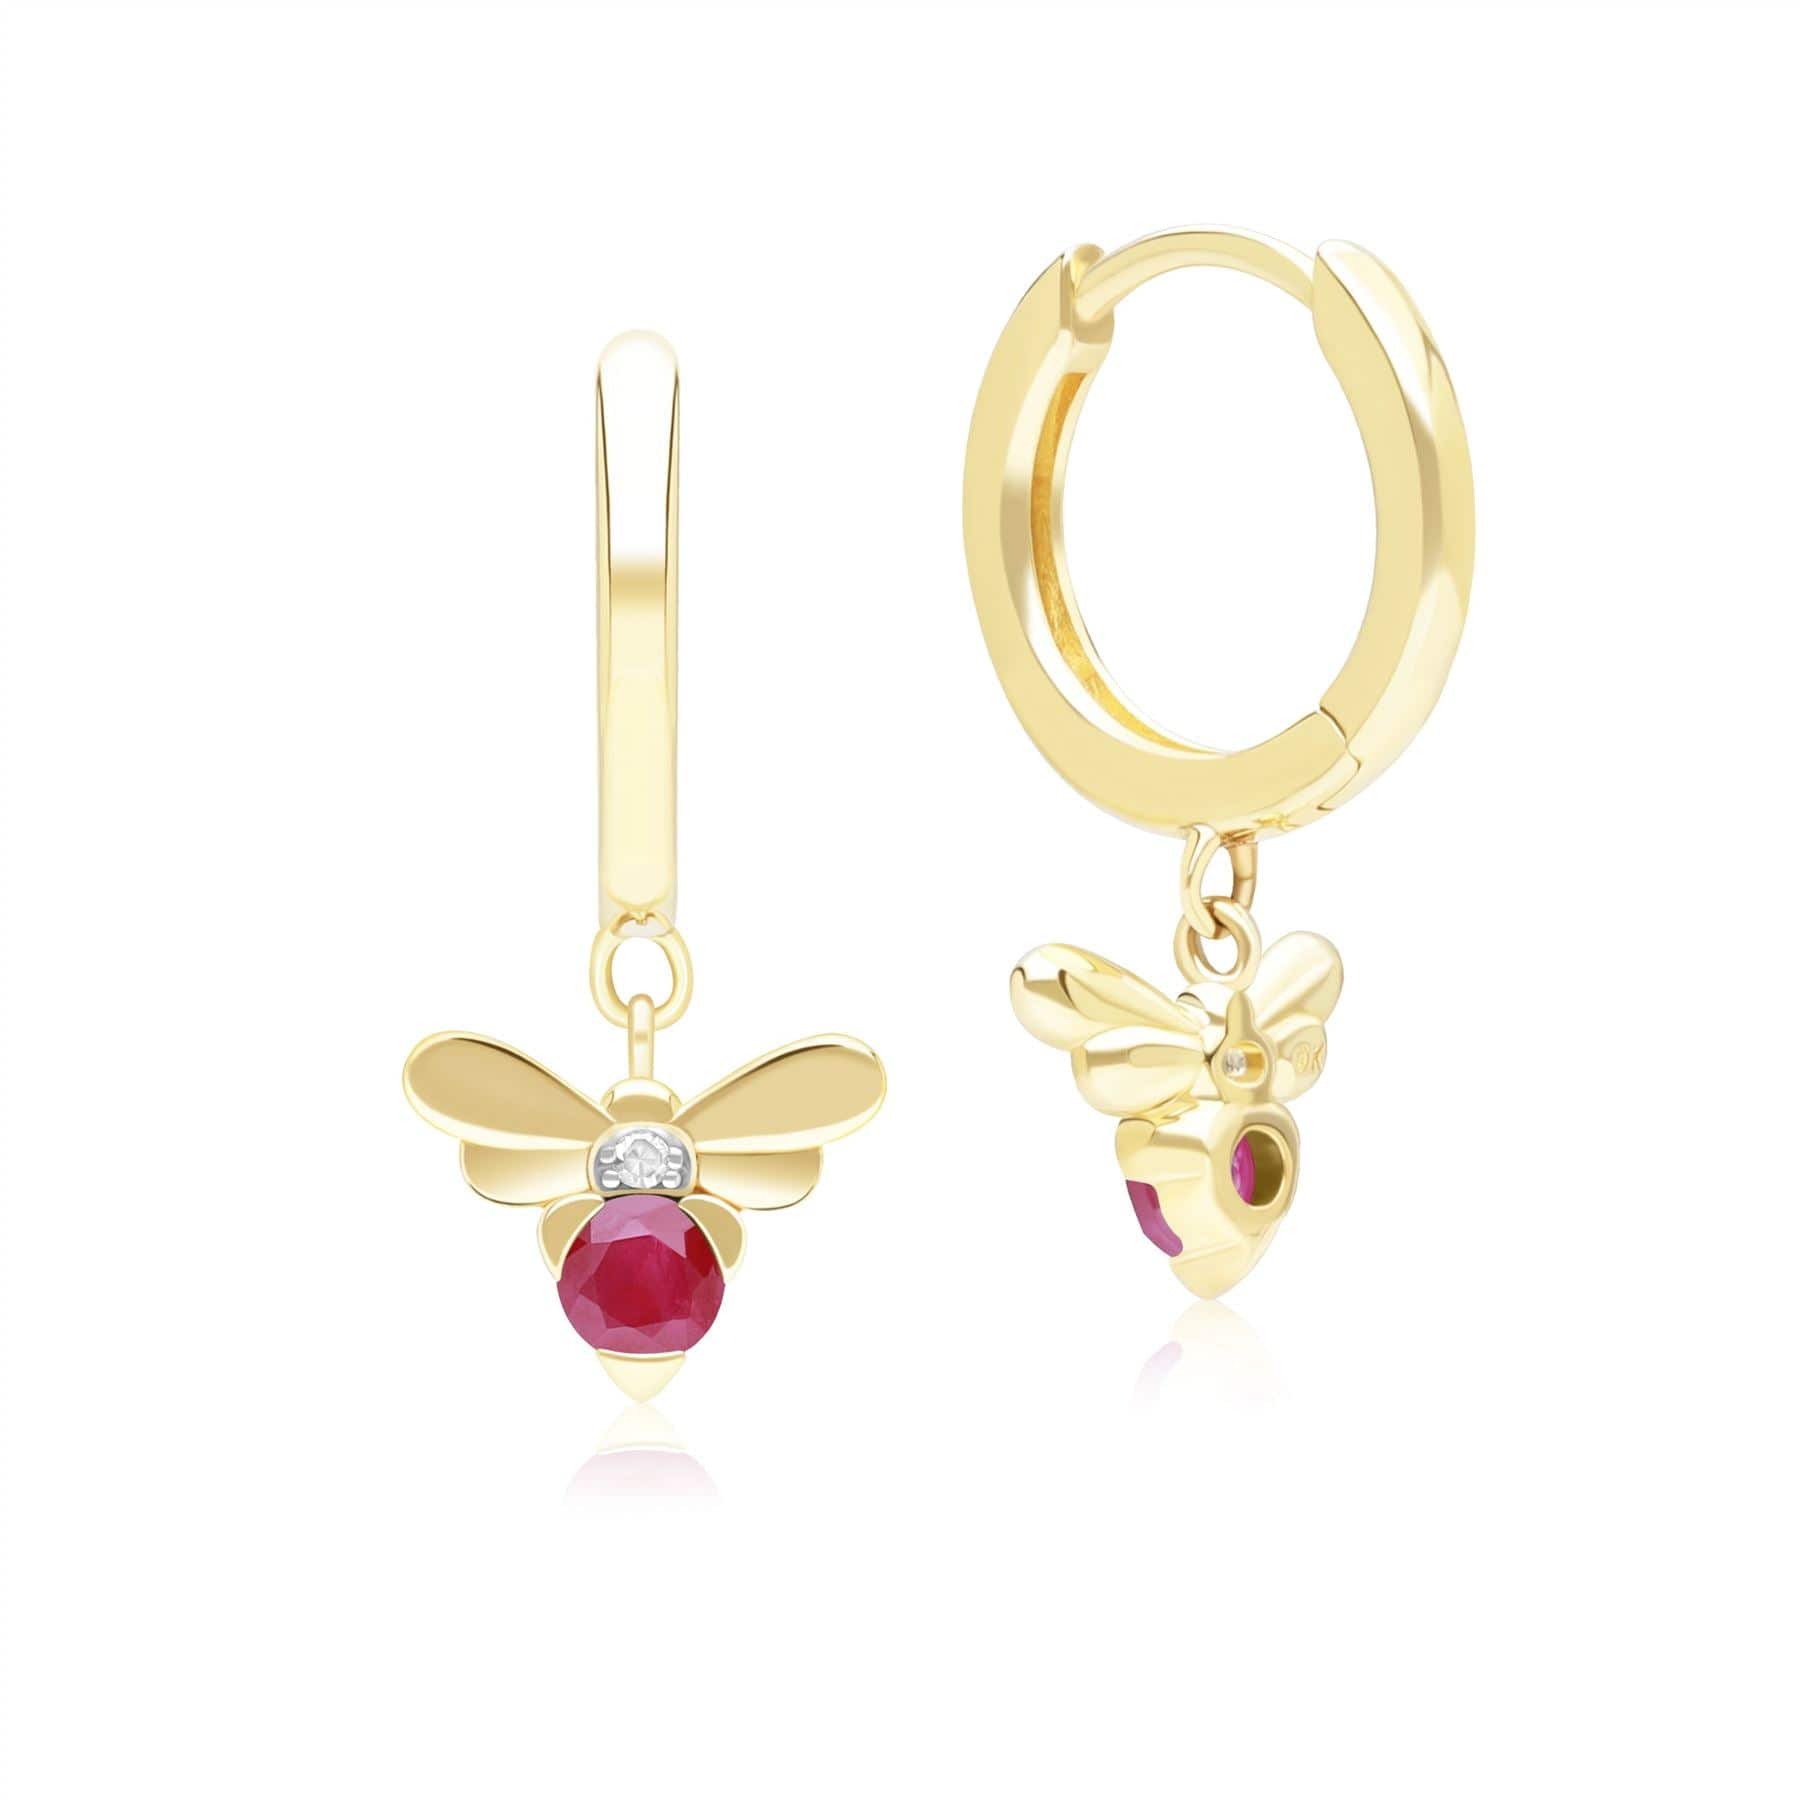 Honeycomb Inspired Ruby and Diamond Bee Hoop Earrings in 9ct Yellow GoldBack  135E1874019